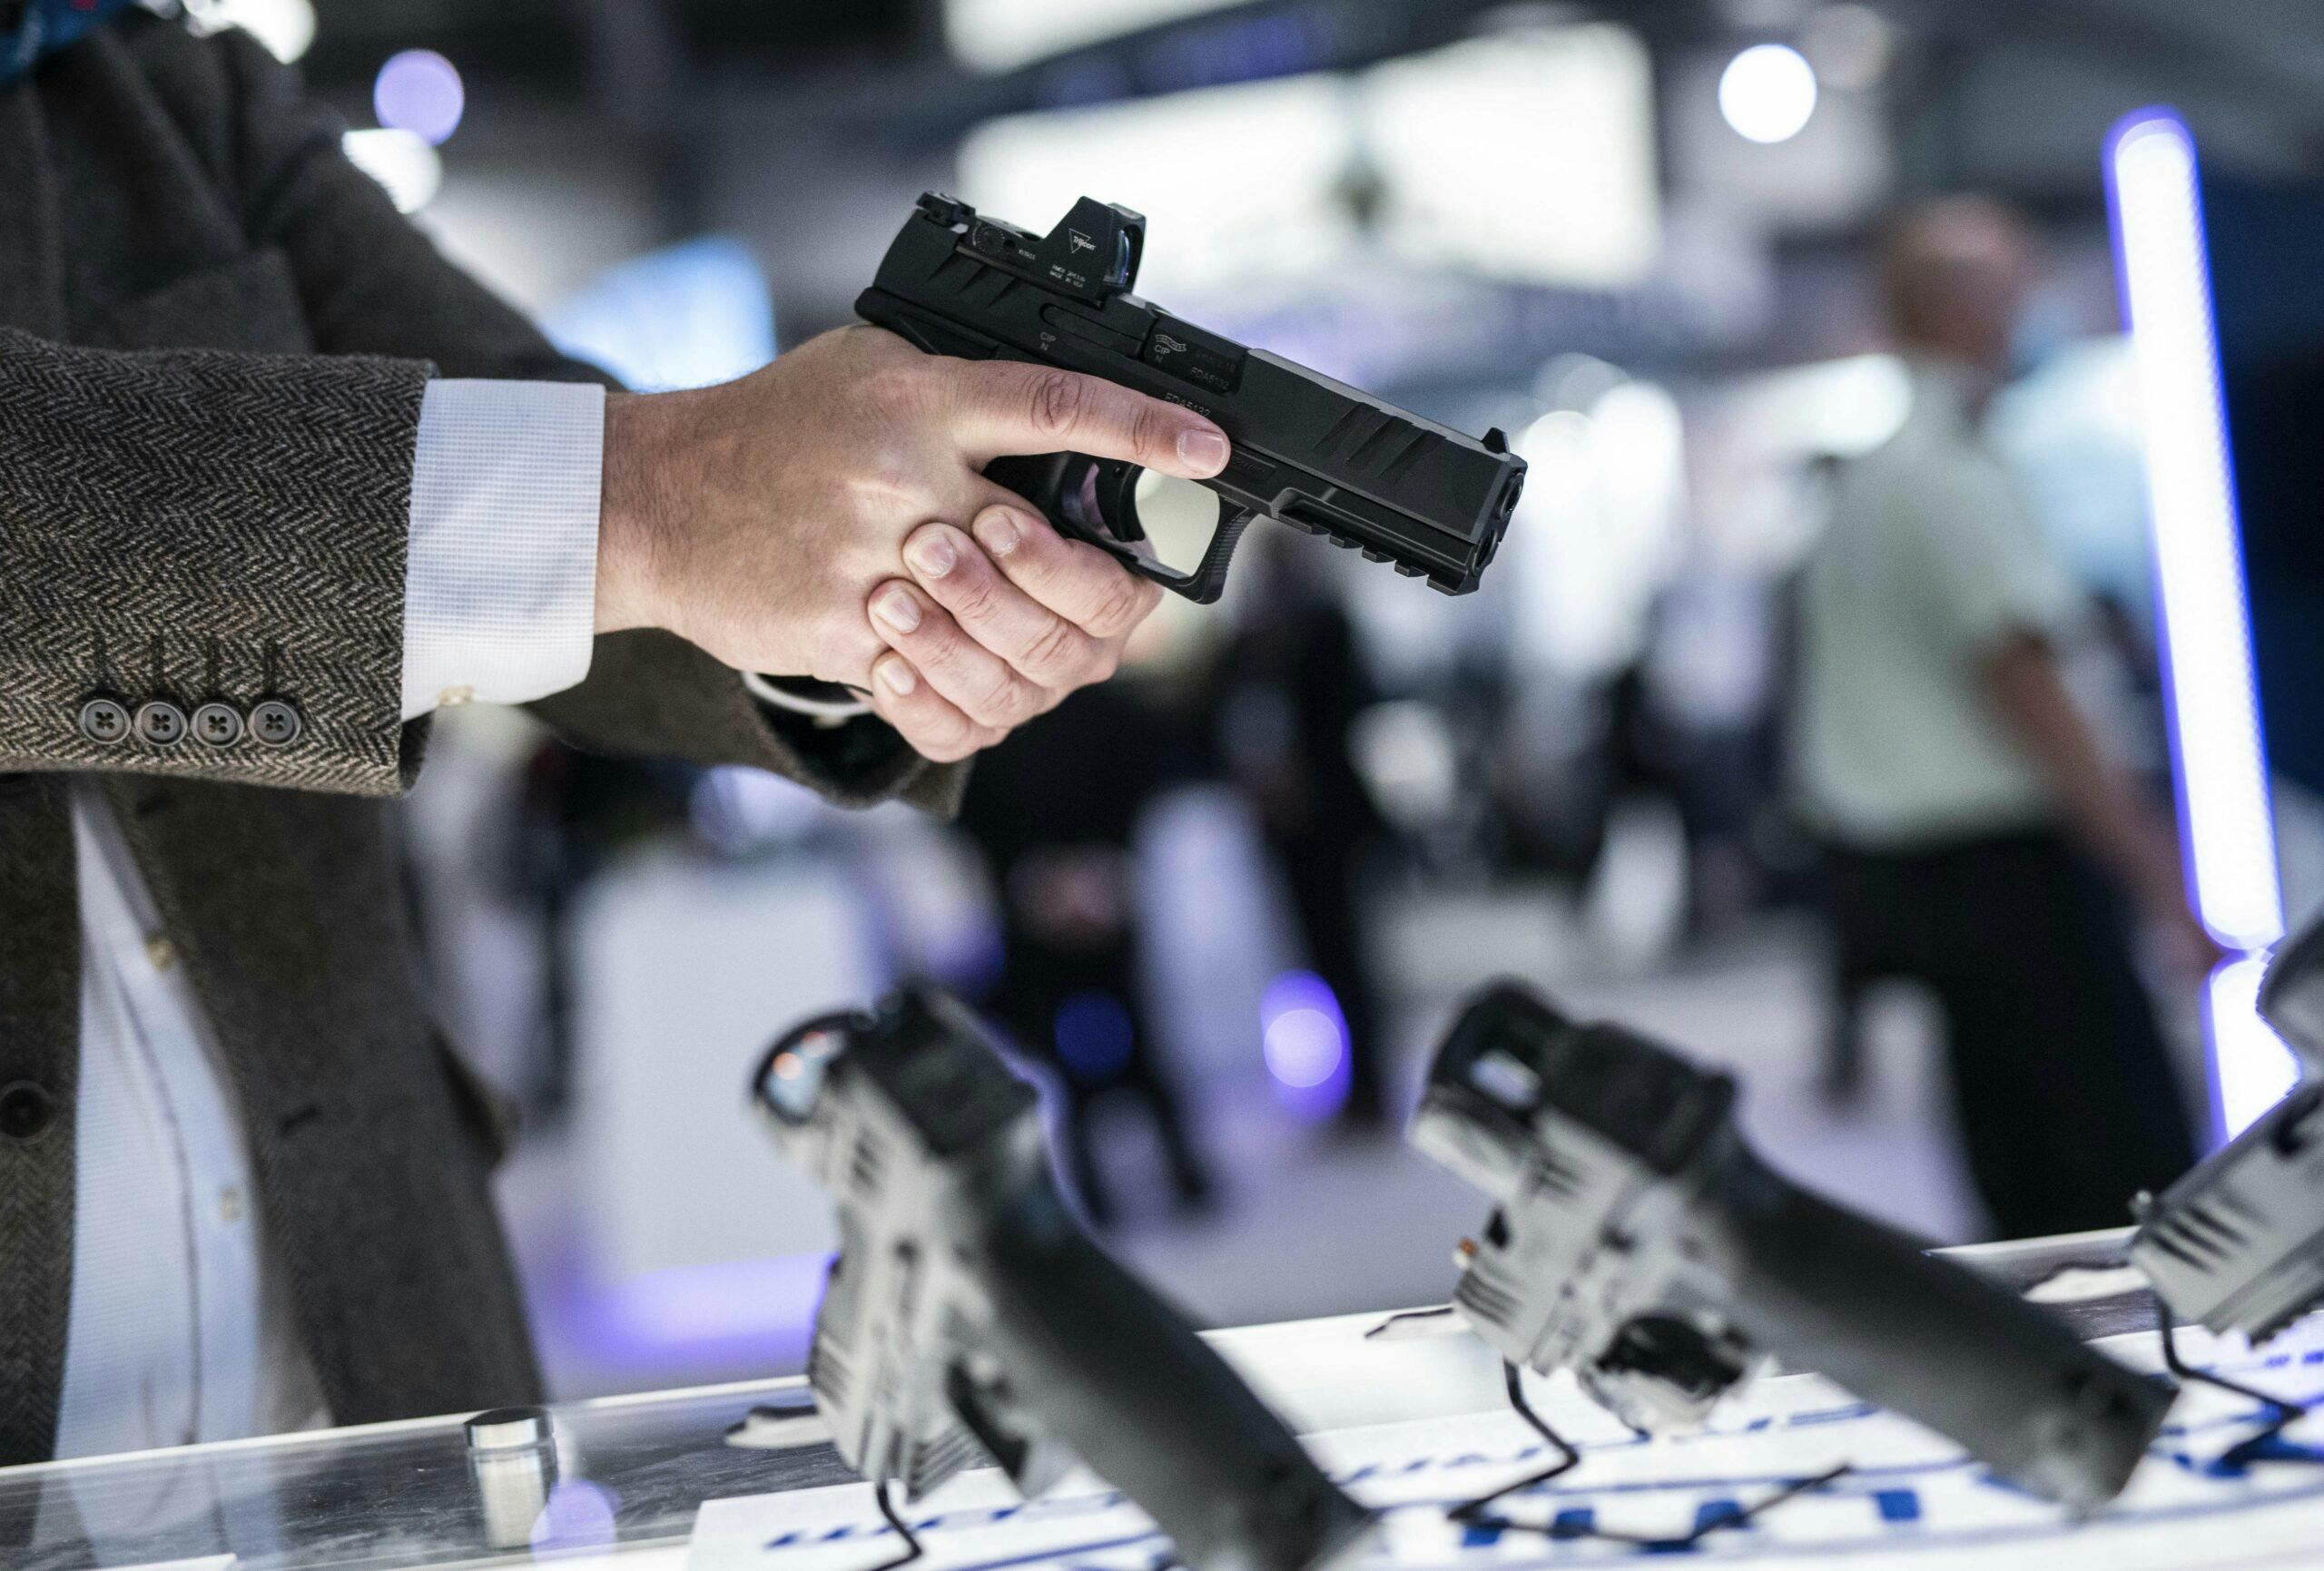 Critics blame delays at firearms centres on Liberals’ gun control measures